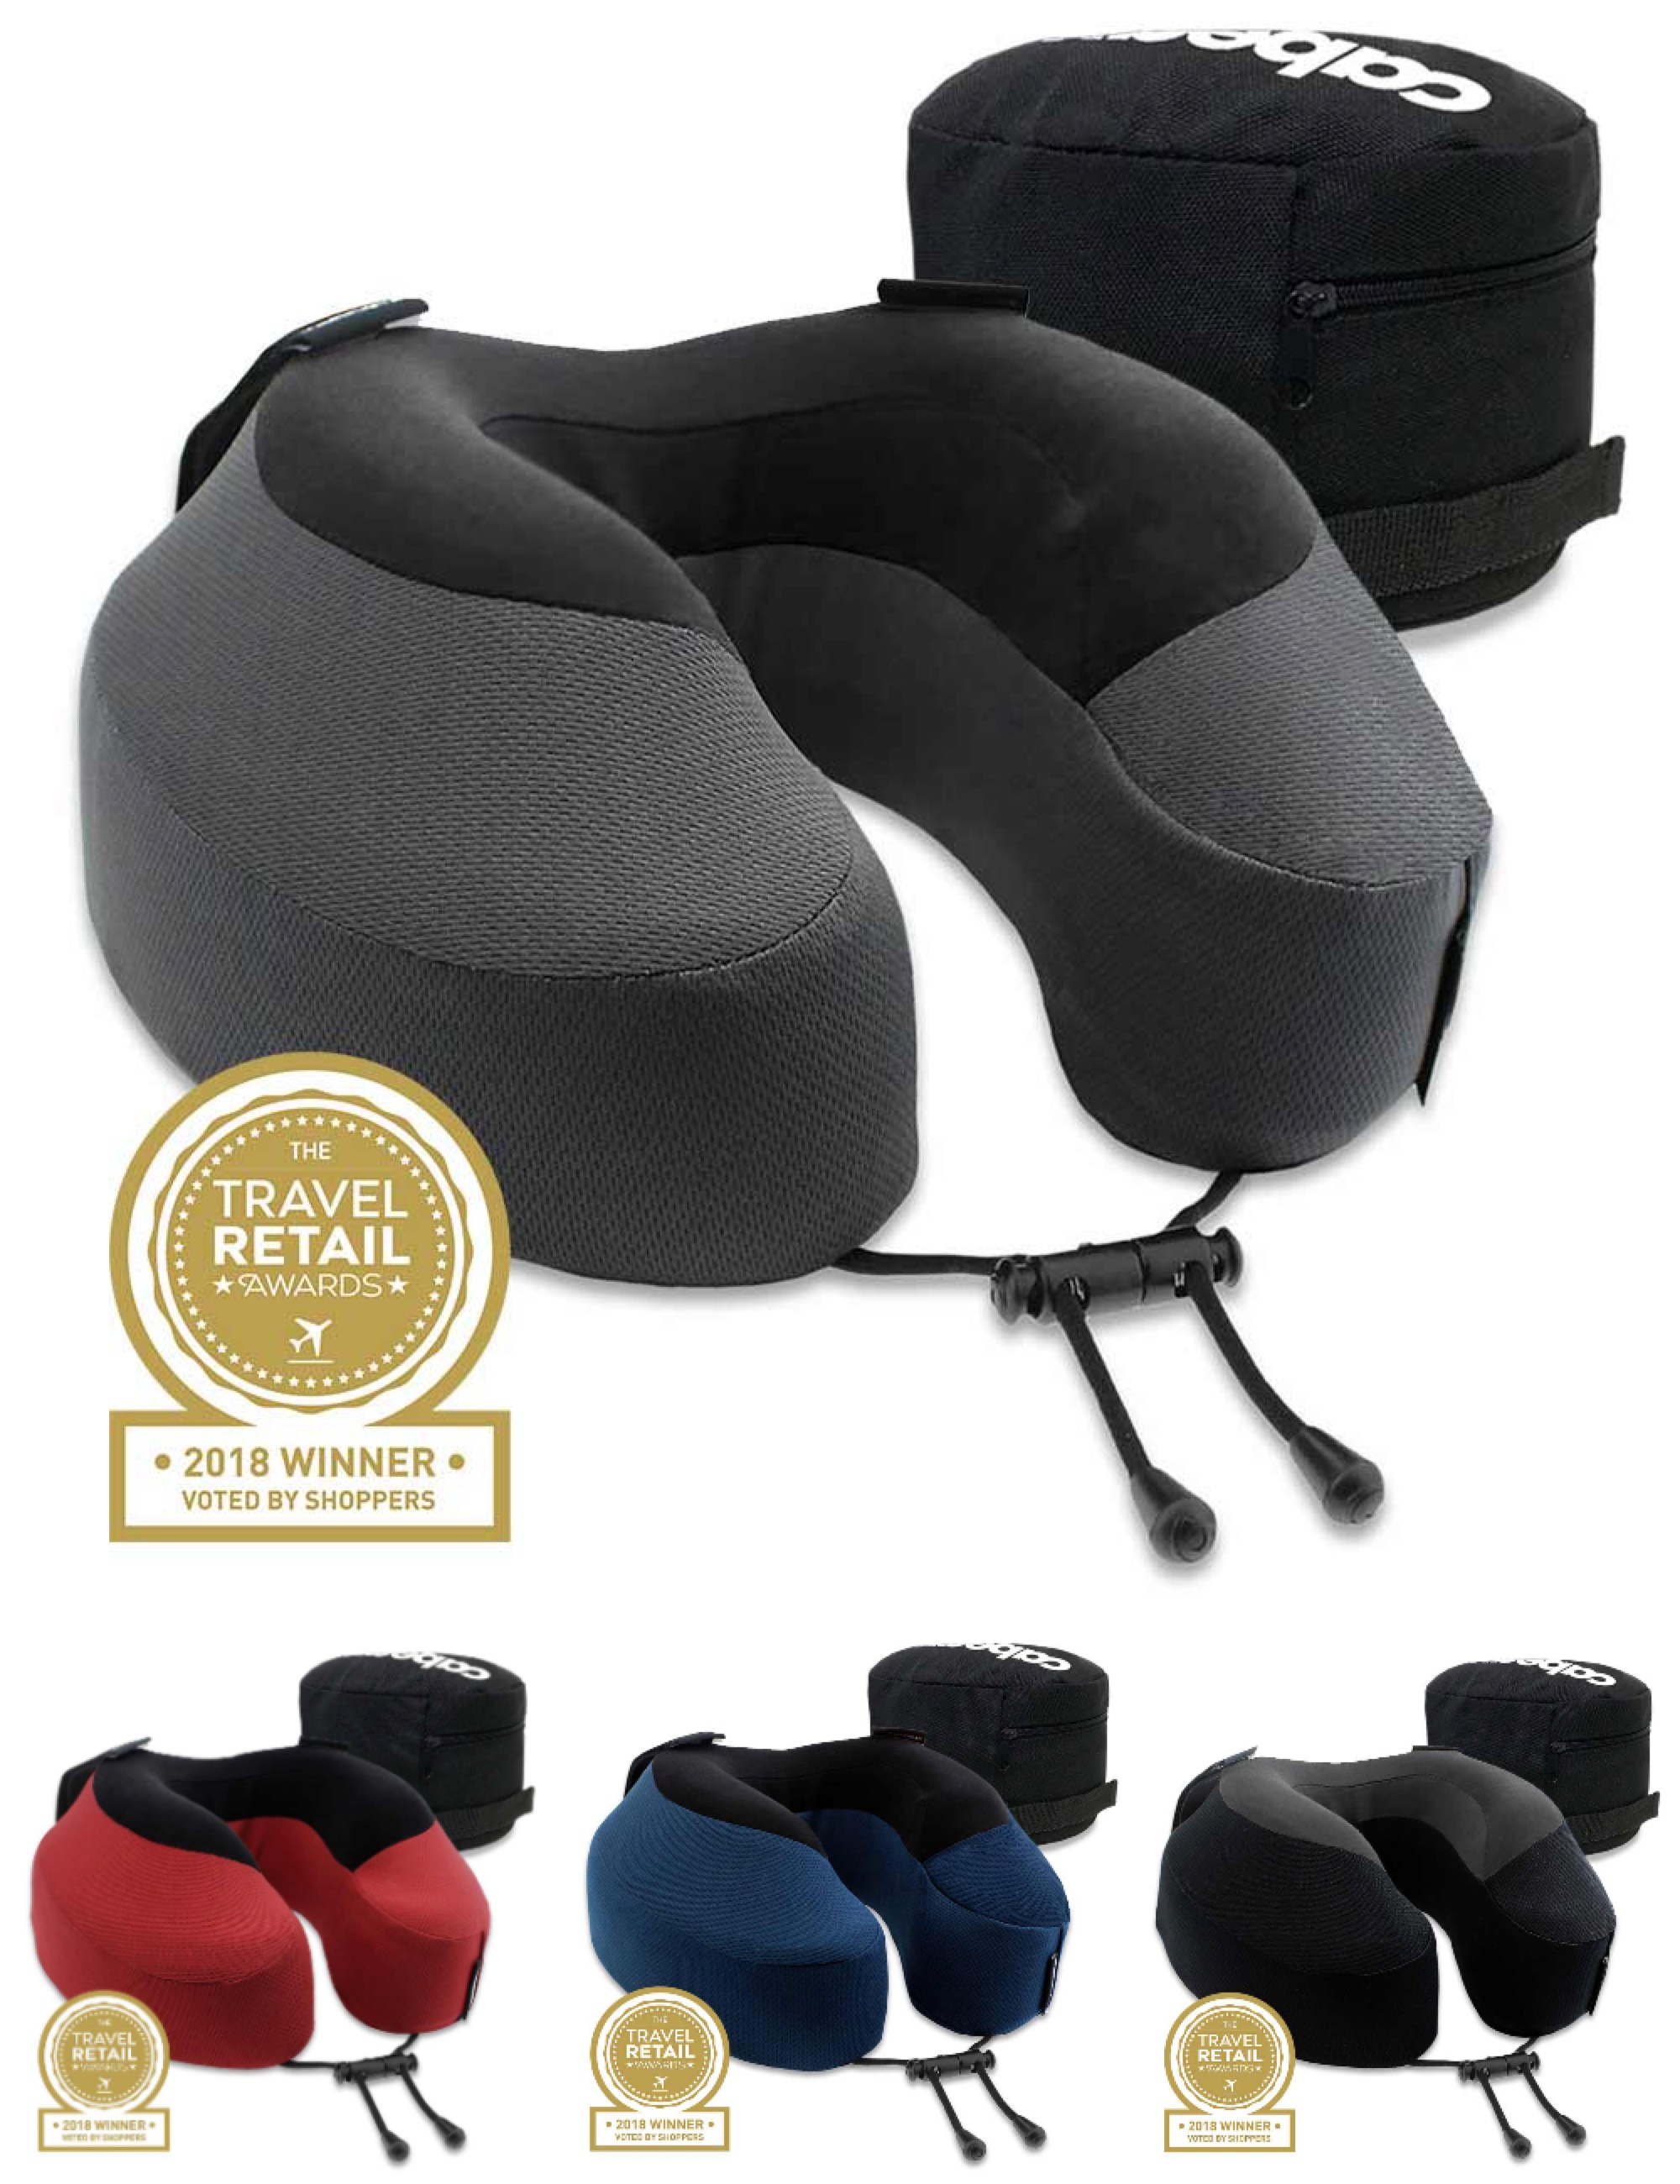 Cabeau Evolution S3 Memory Foam Travel Pillow With Seat Strap System By Cabeau Evolution S3 Pillow